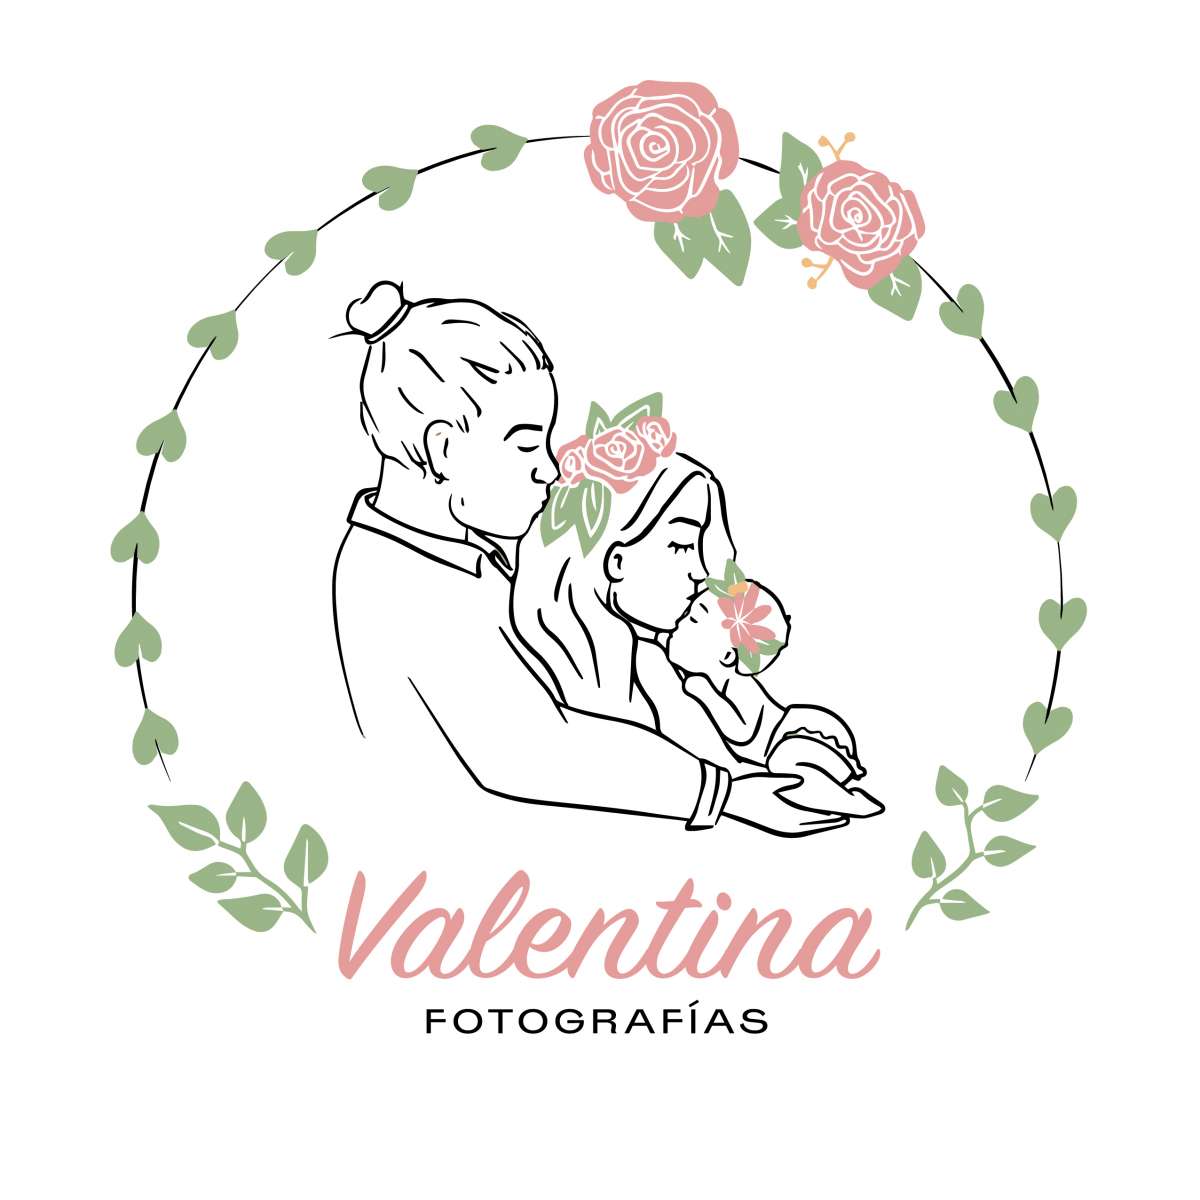 Valentina Fotografías - Valencia - Fotografia de bodas